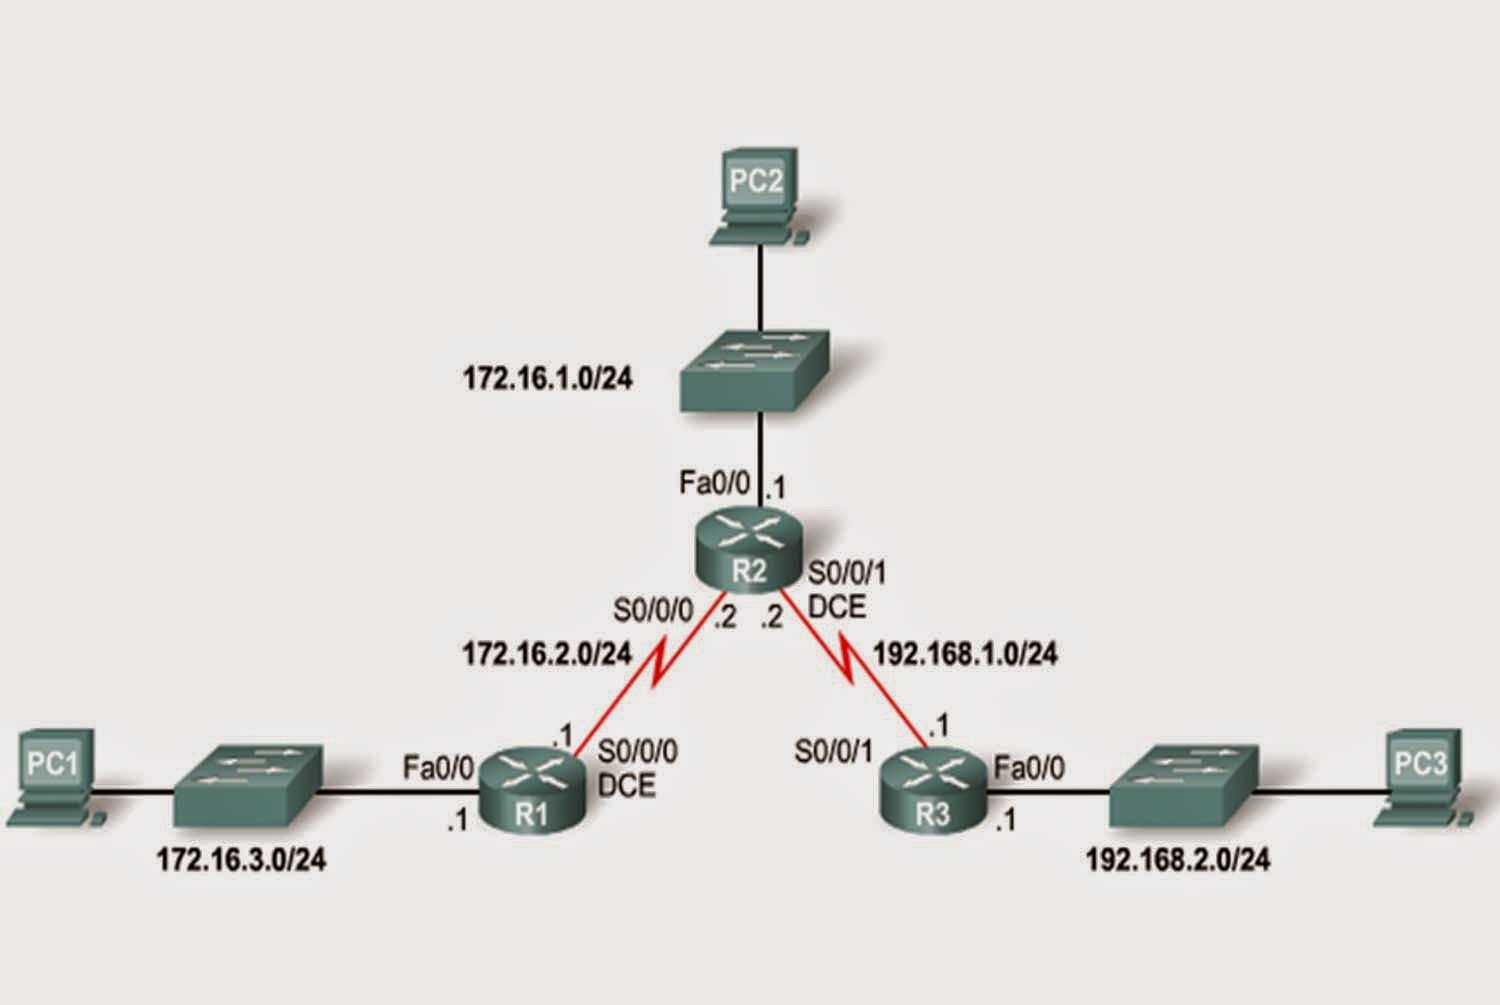 Настройка маршрутизации сети